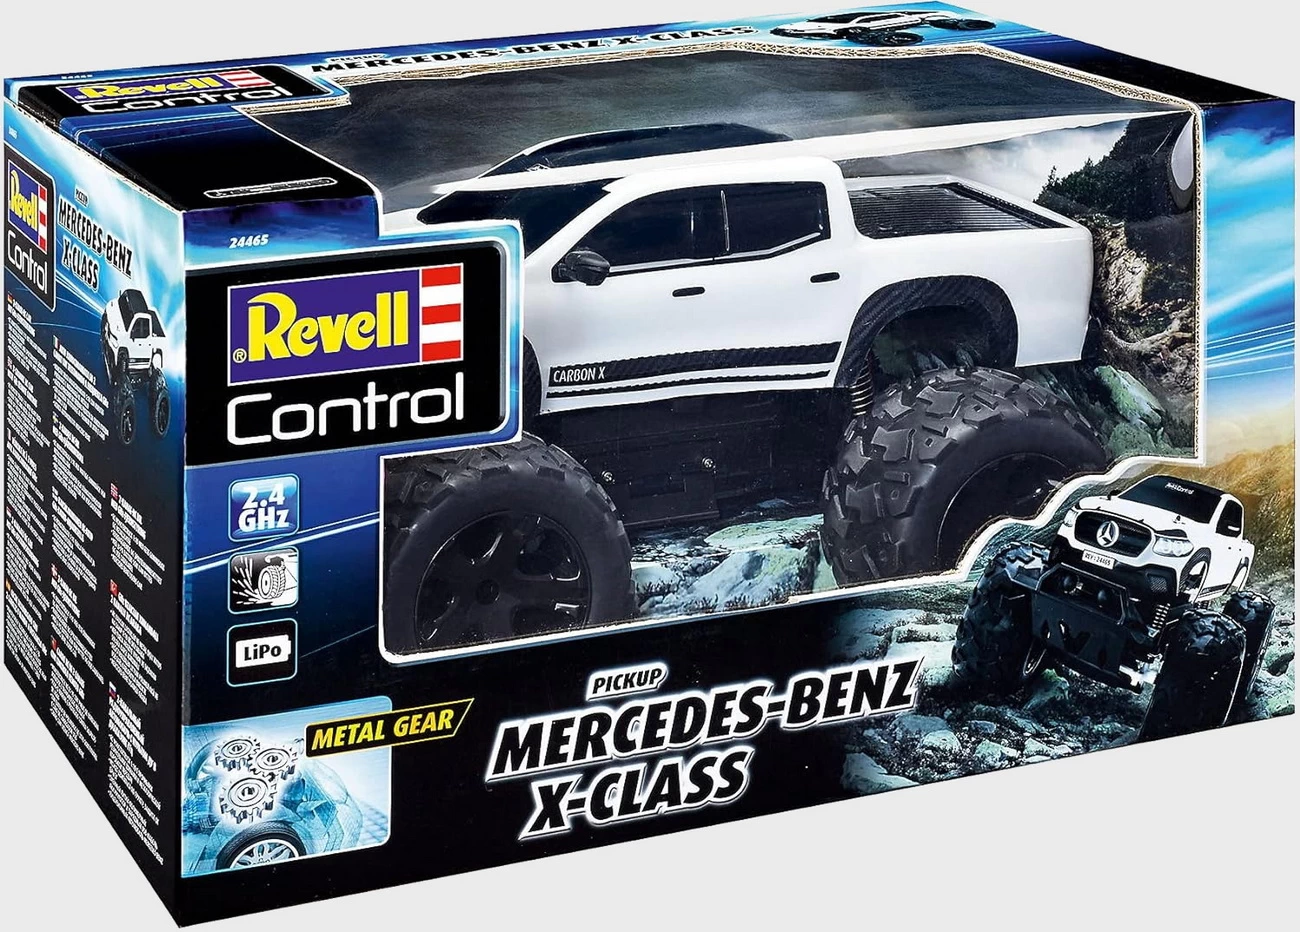 Revell Control 24465 -  Mercedes-Benz X-Class RC Auto